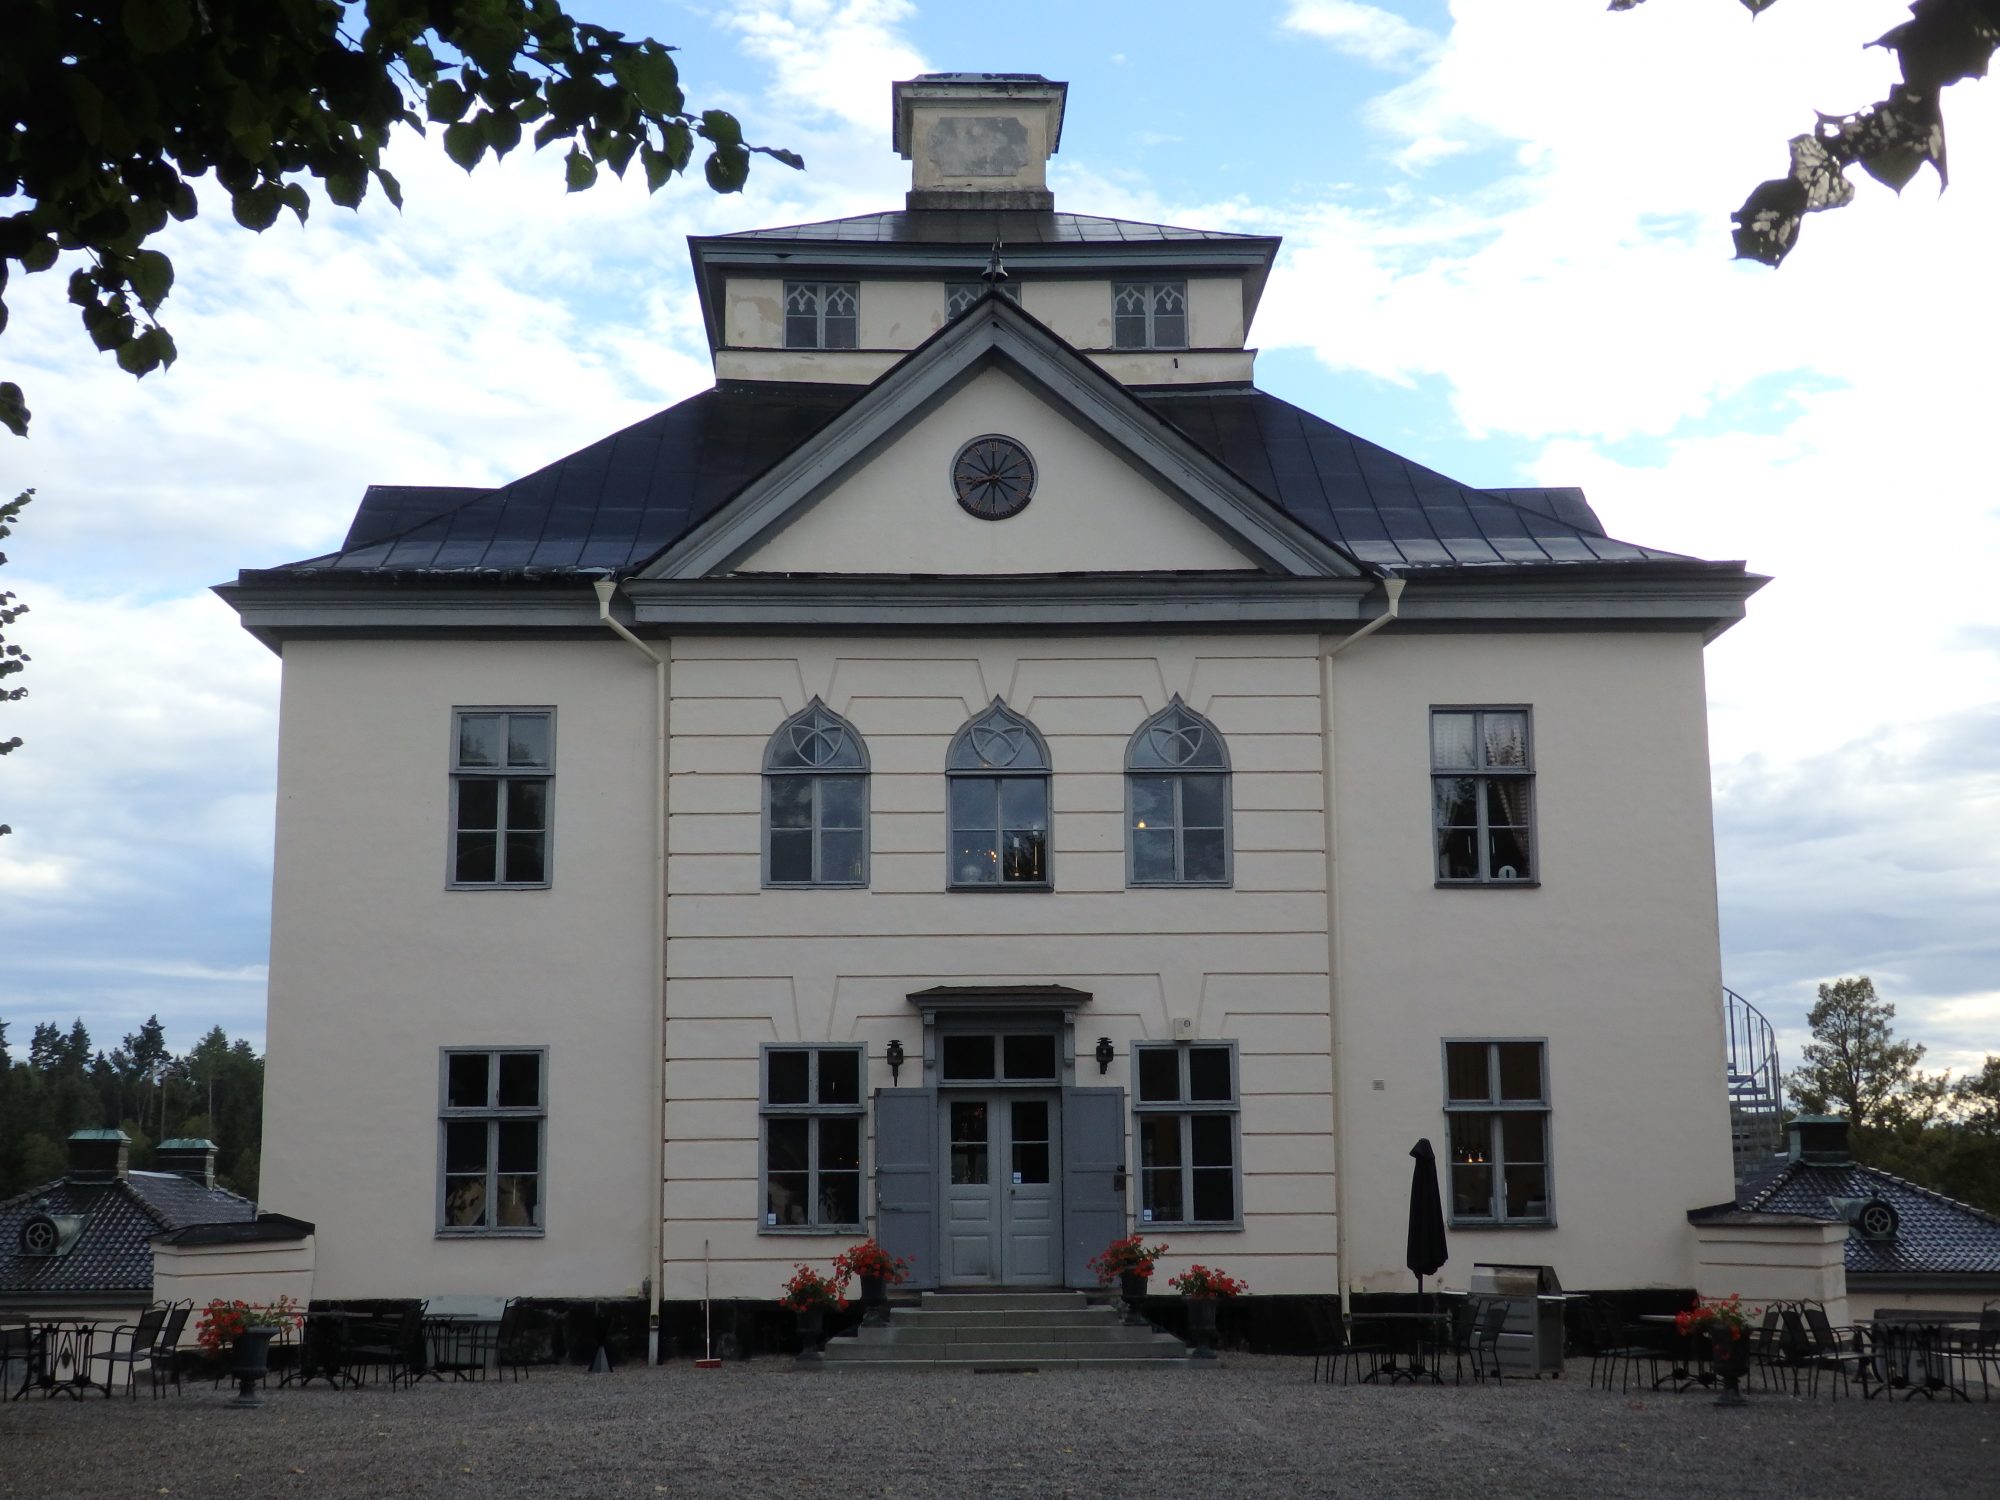 Öster Malma main house